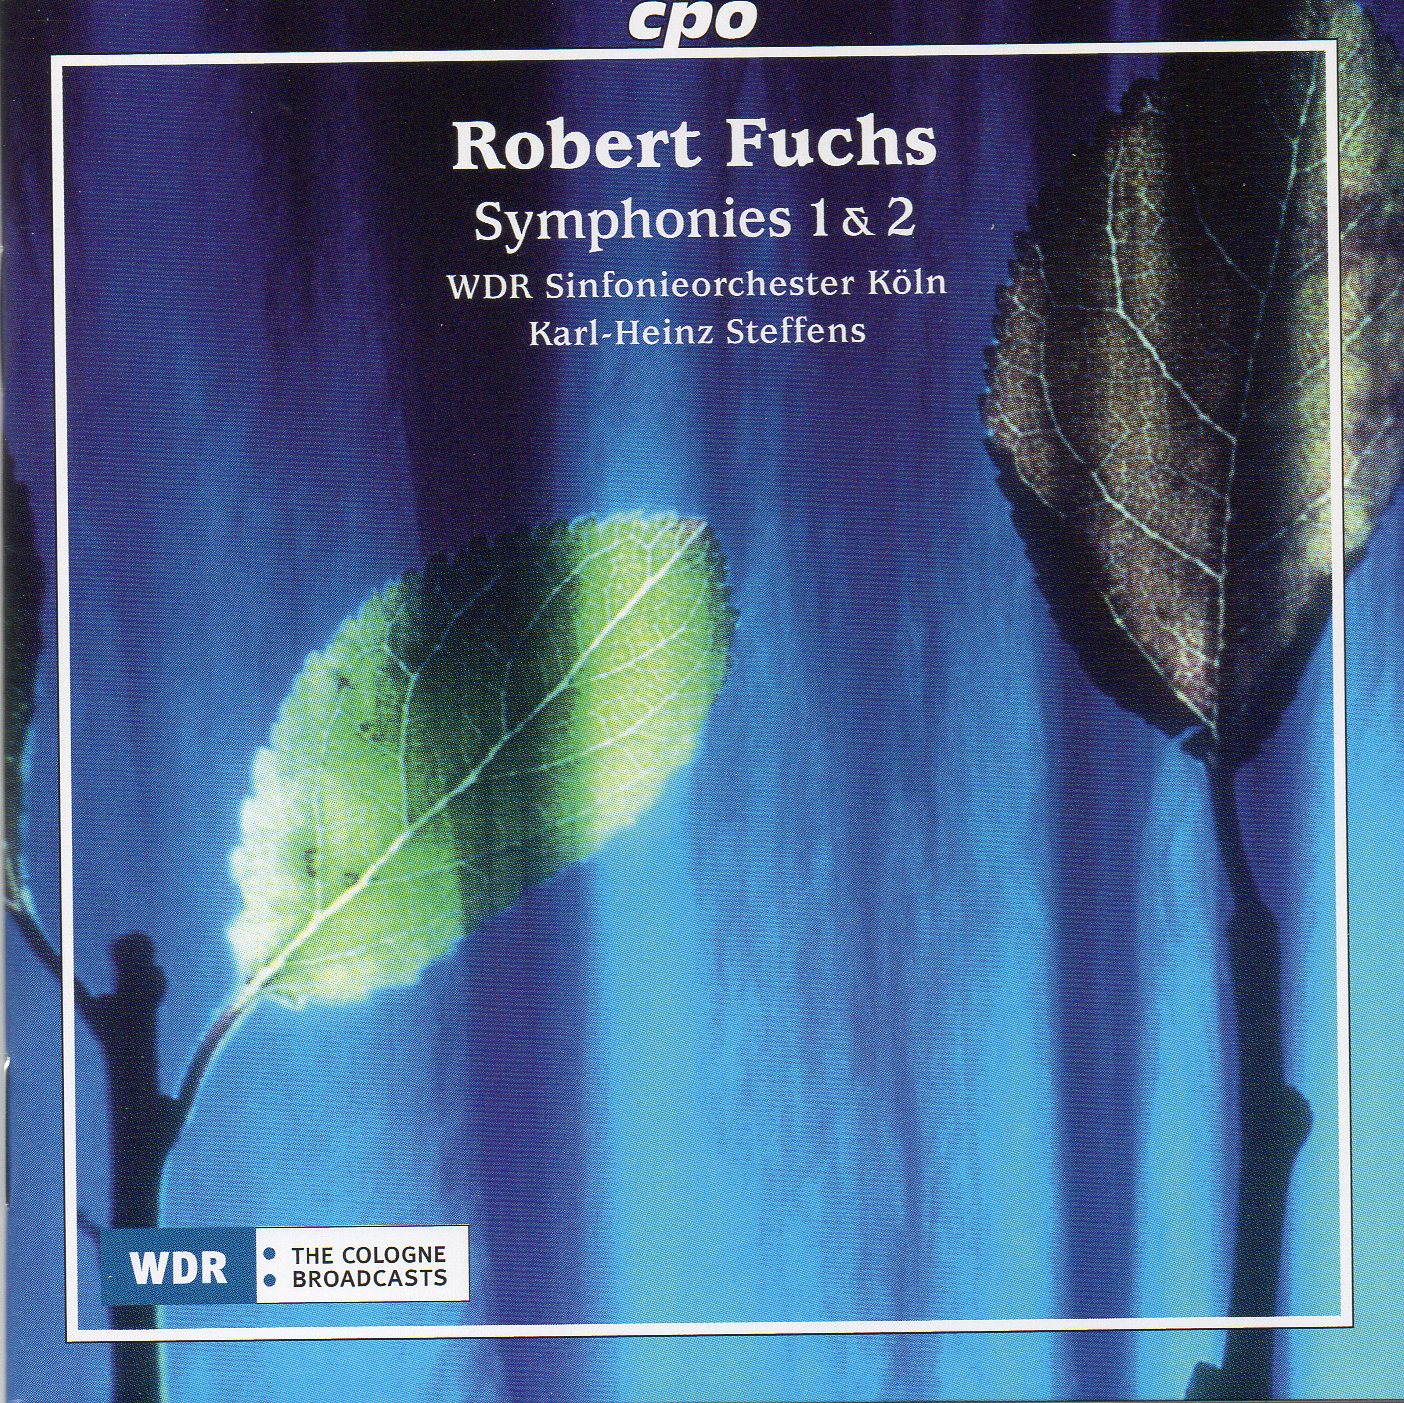 Fuchs: simfonies 1 i 2